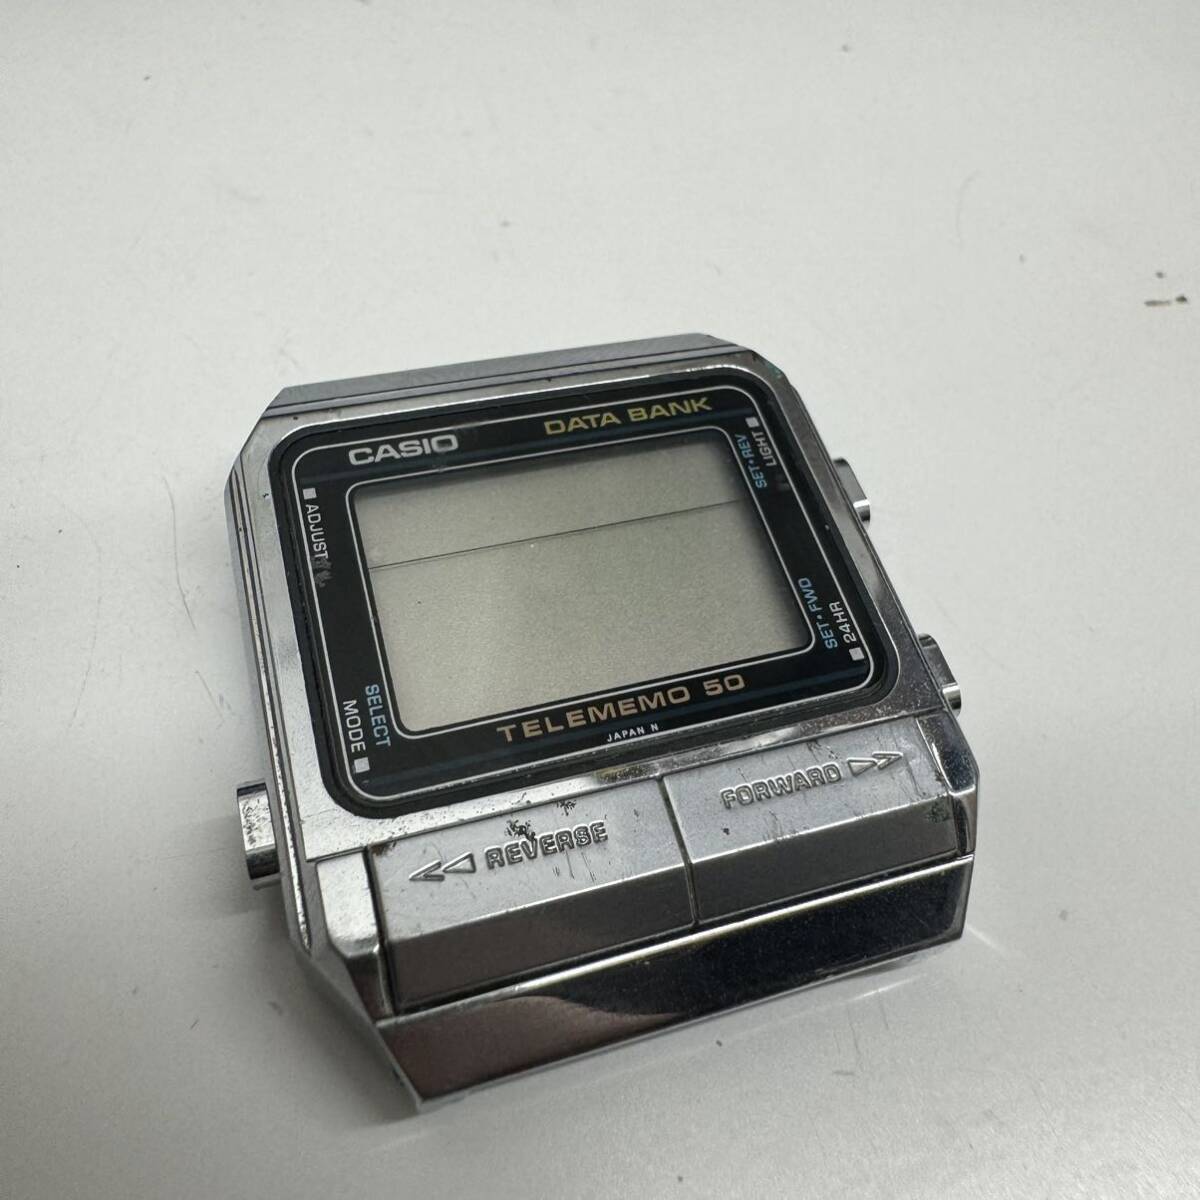 CASIO カシオ DB-500 TELEMEMO 50 DATA BANK デジタル メンズ 腕時計 ジャンク 要修理 クォーツ 10115の画像1